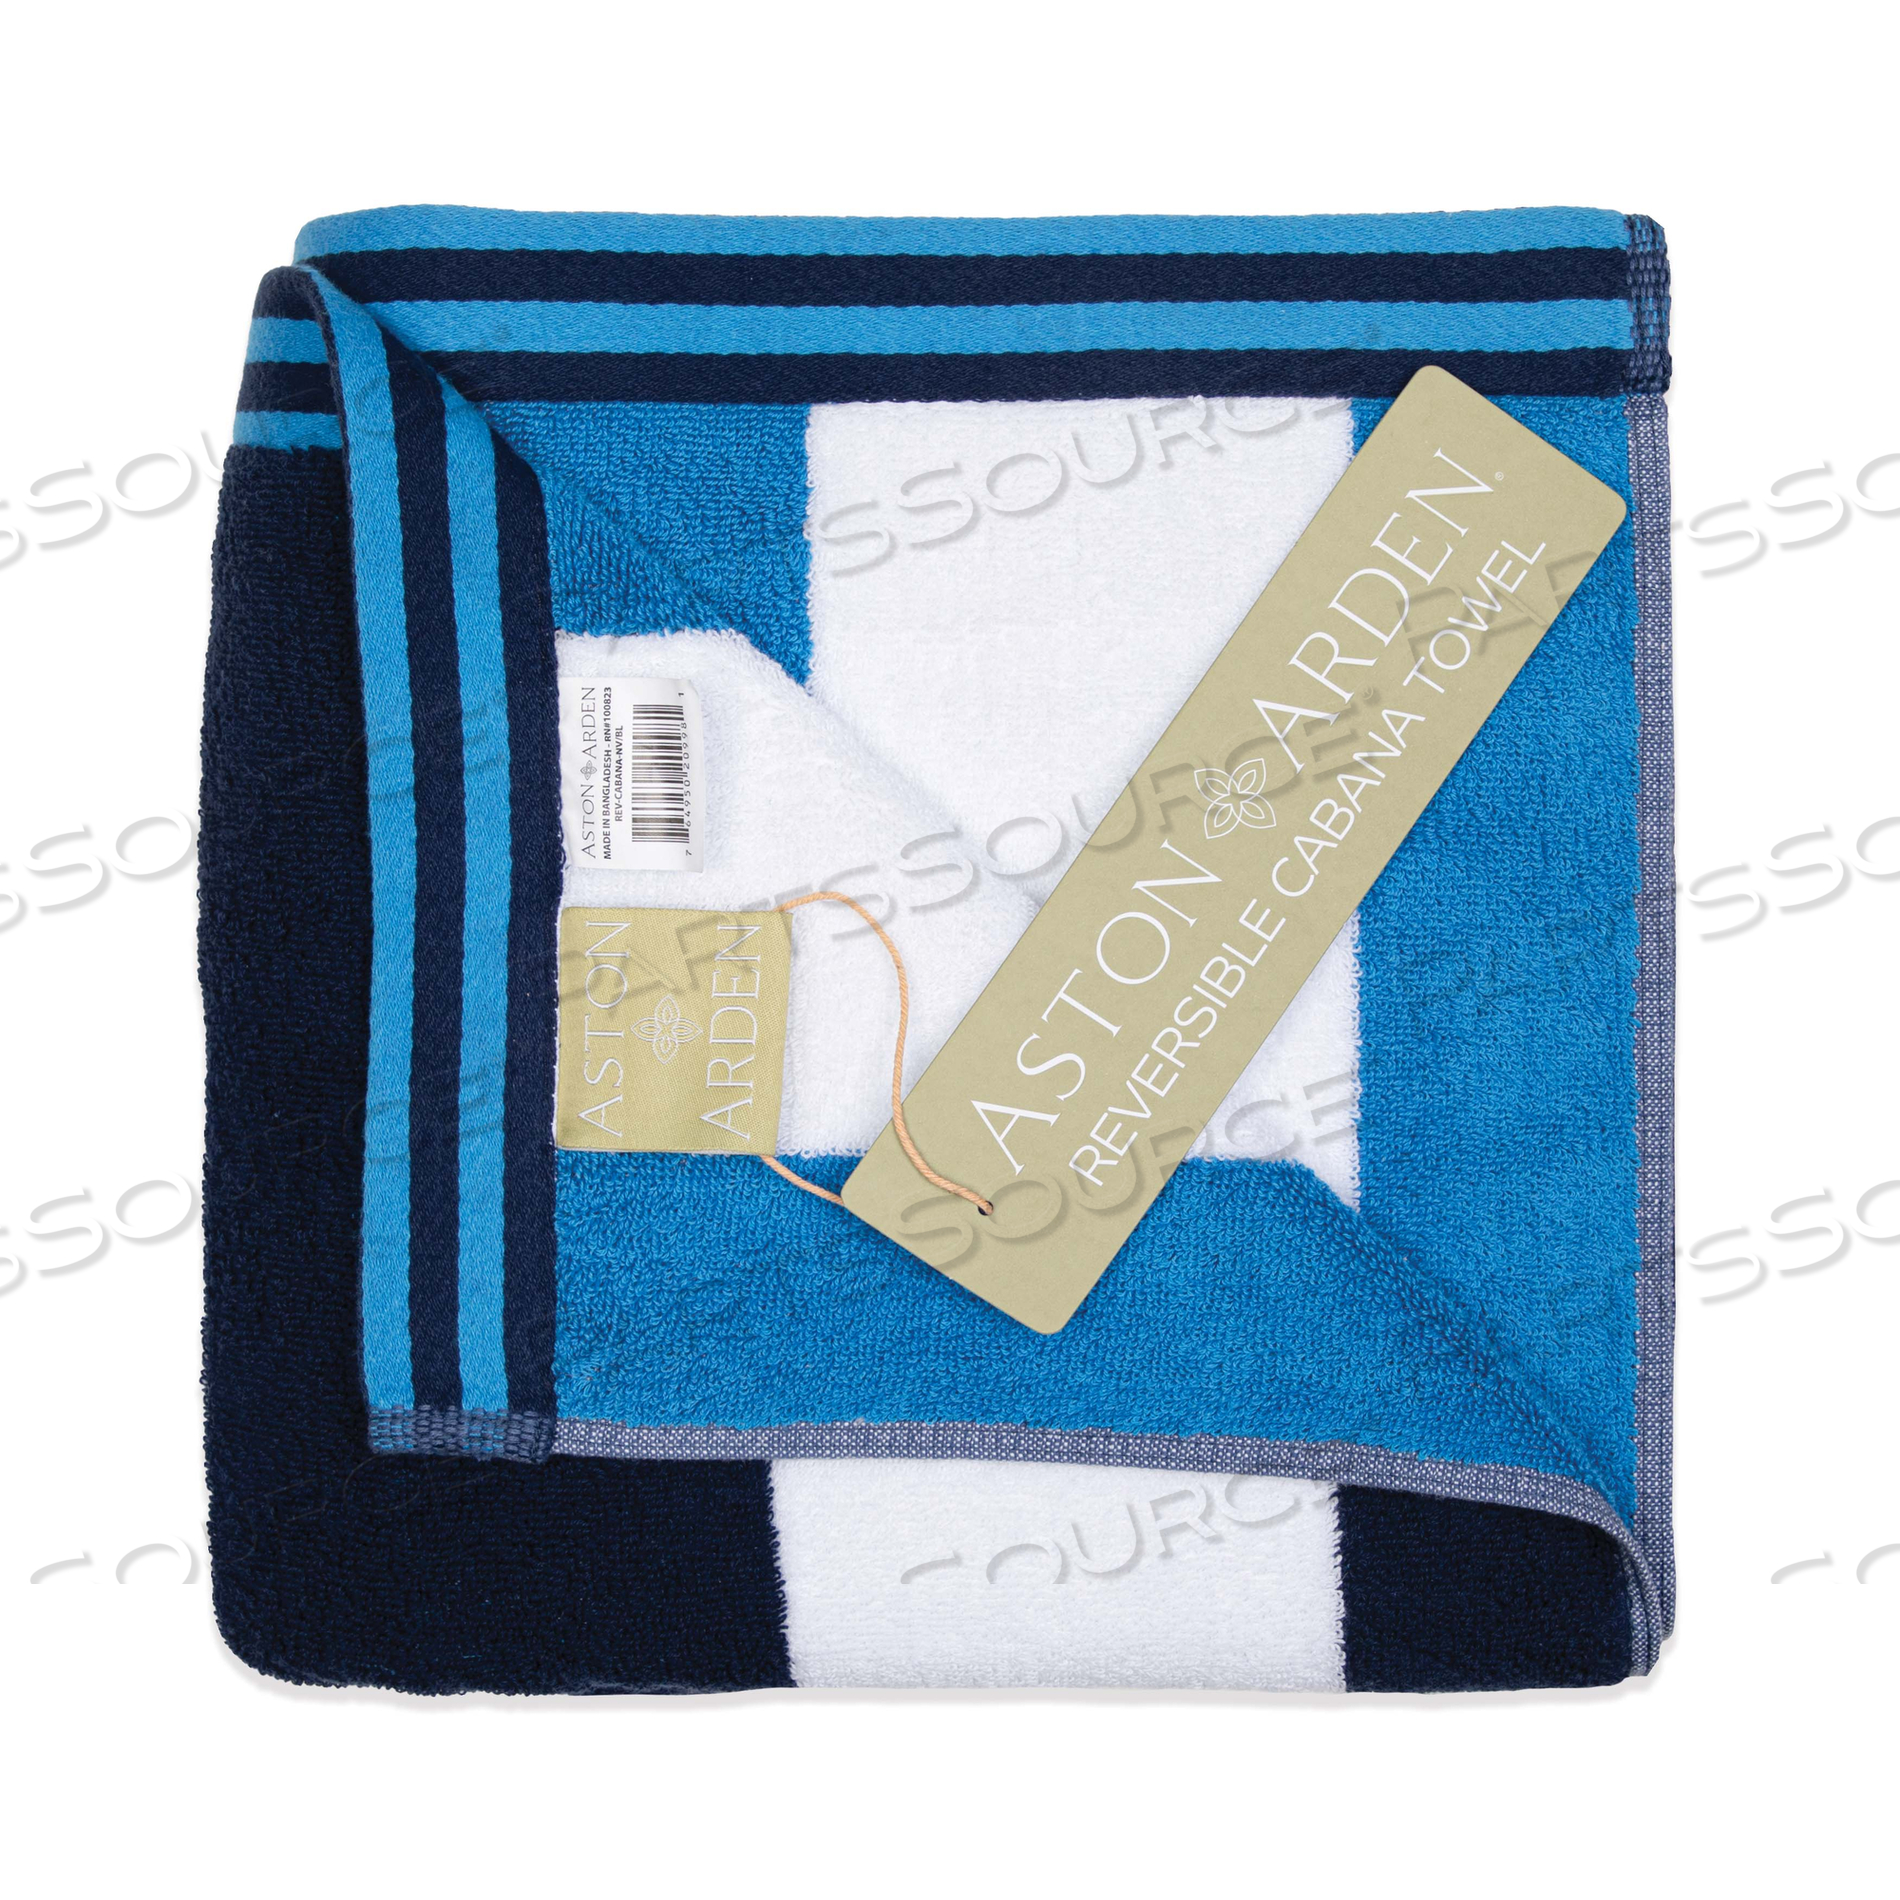 R&R Value Blue Center Stripe Pool Towel - 44 x 22 - 12 Pack